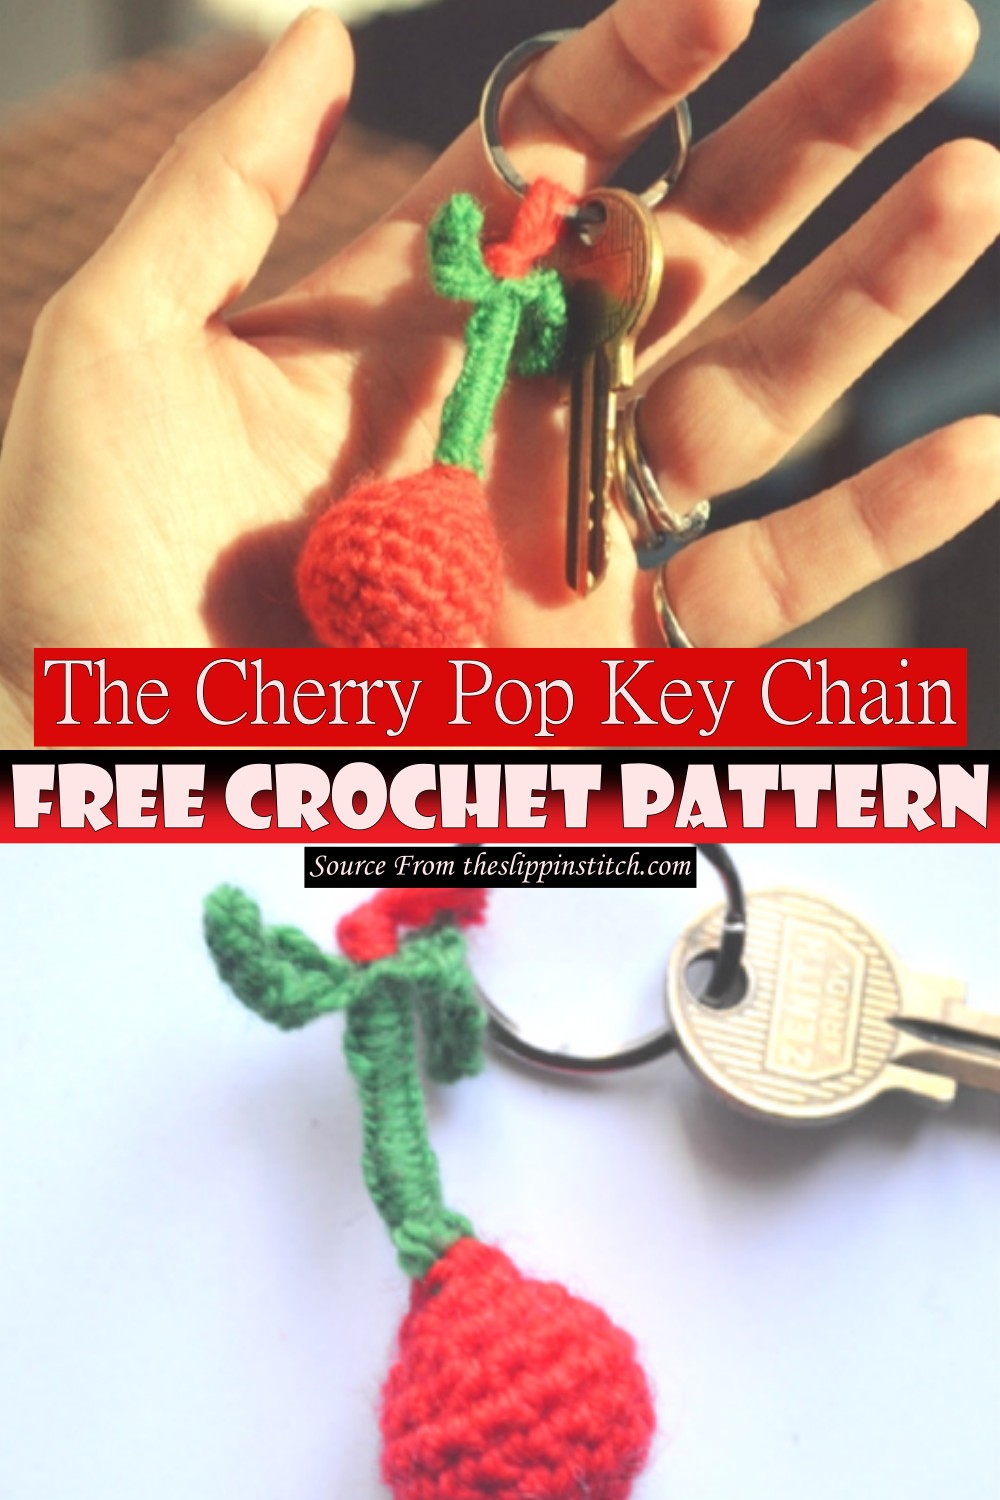 Free Crochet The Cherry Pop Key Chain Pattern